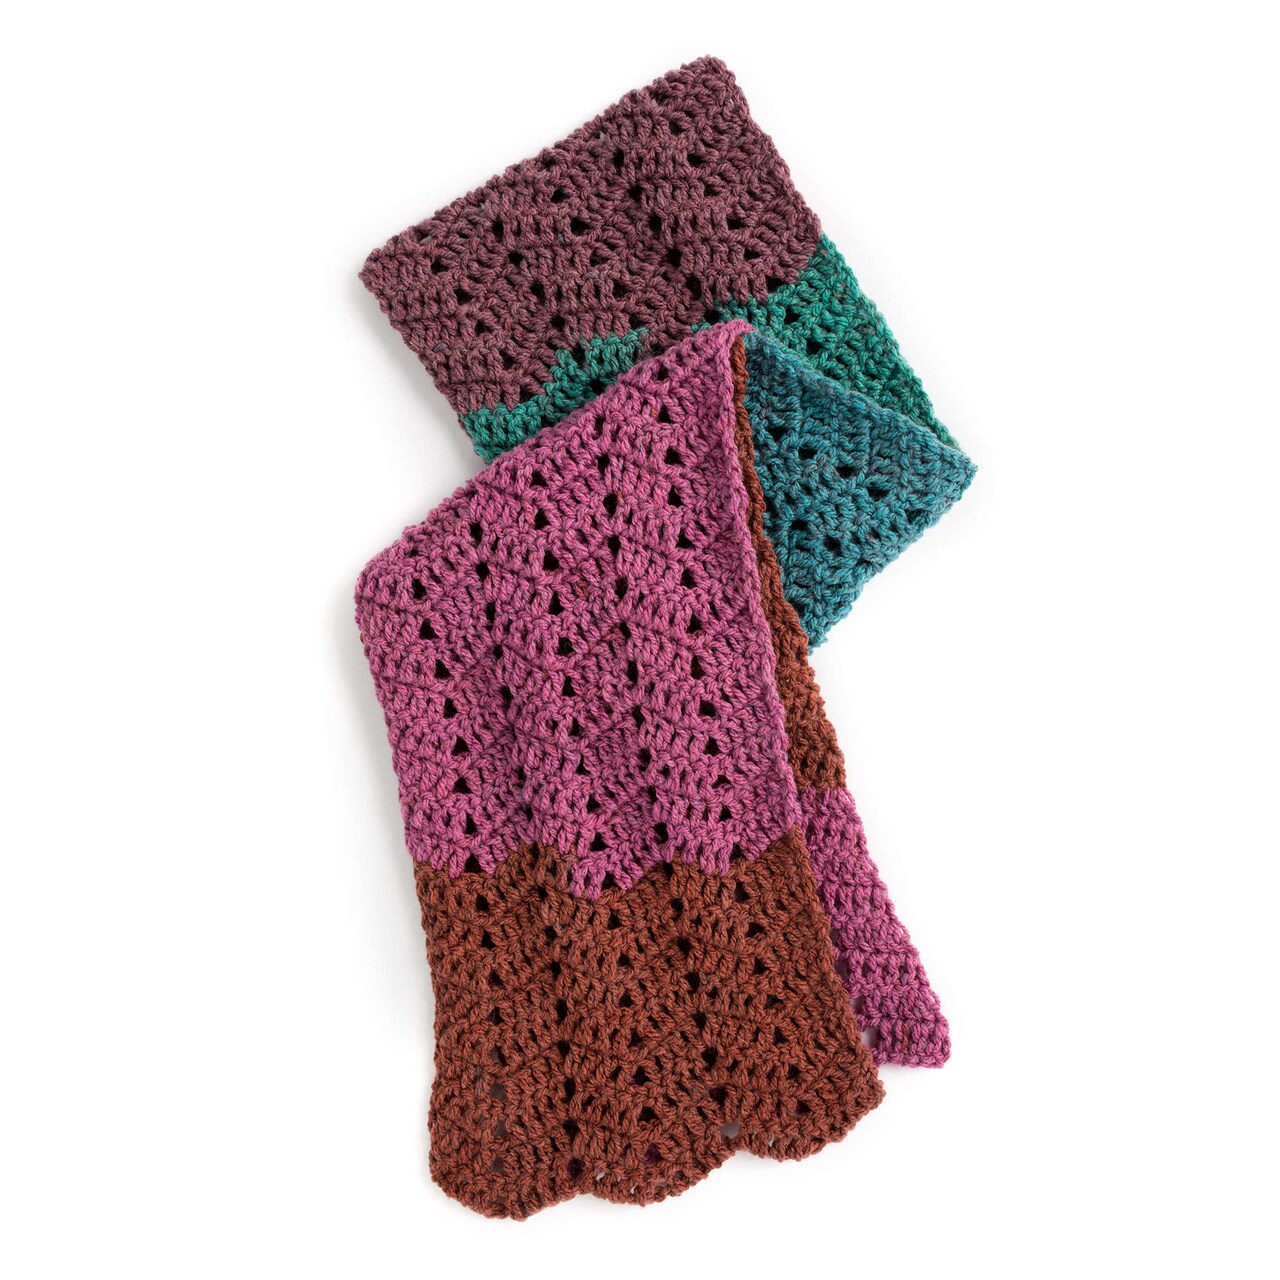 I Love Yarn Week: One Ball Crochet Scarf